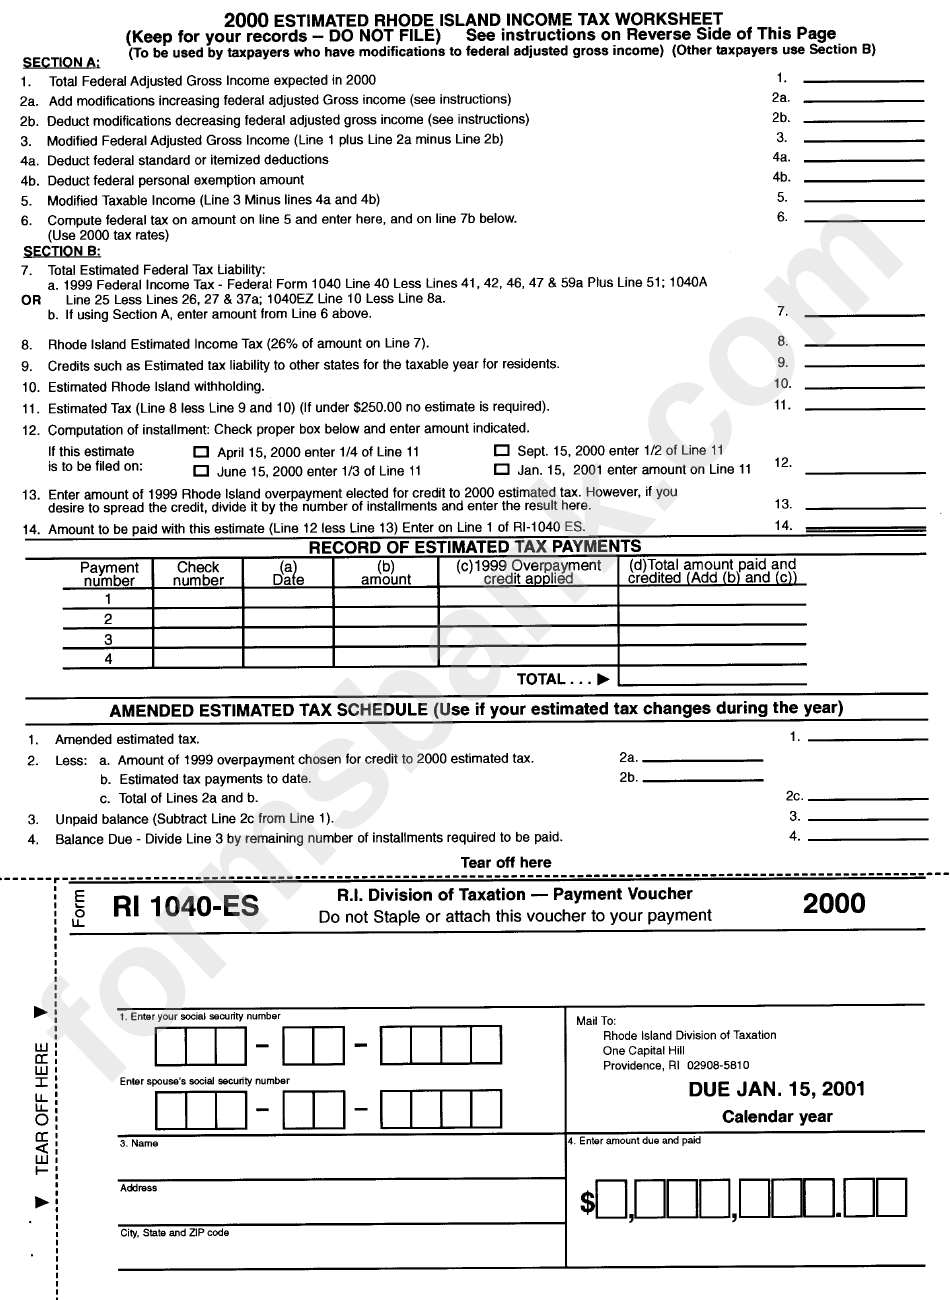 Form Ri 1040-Es - Estimated Rhode Island Income Tax Worksheet - 2000